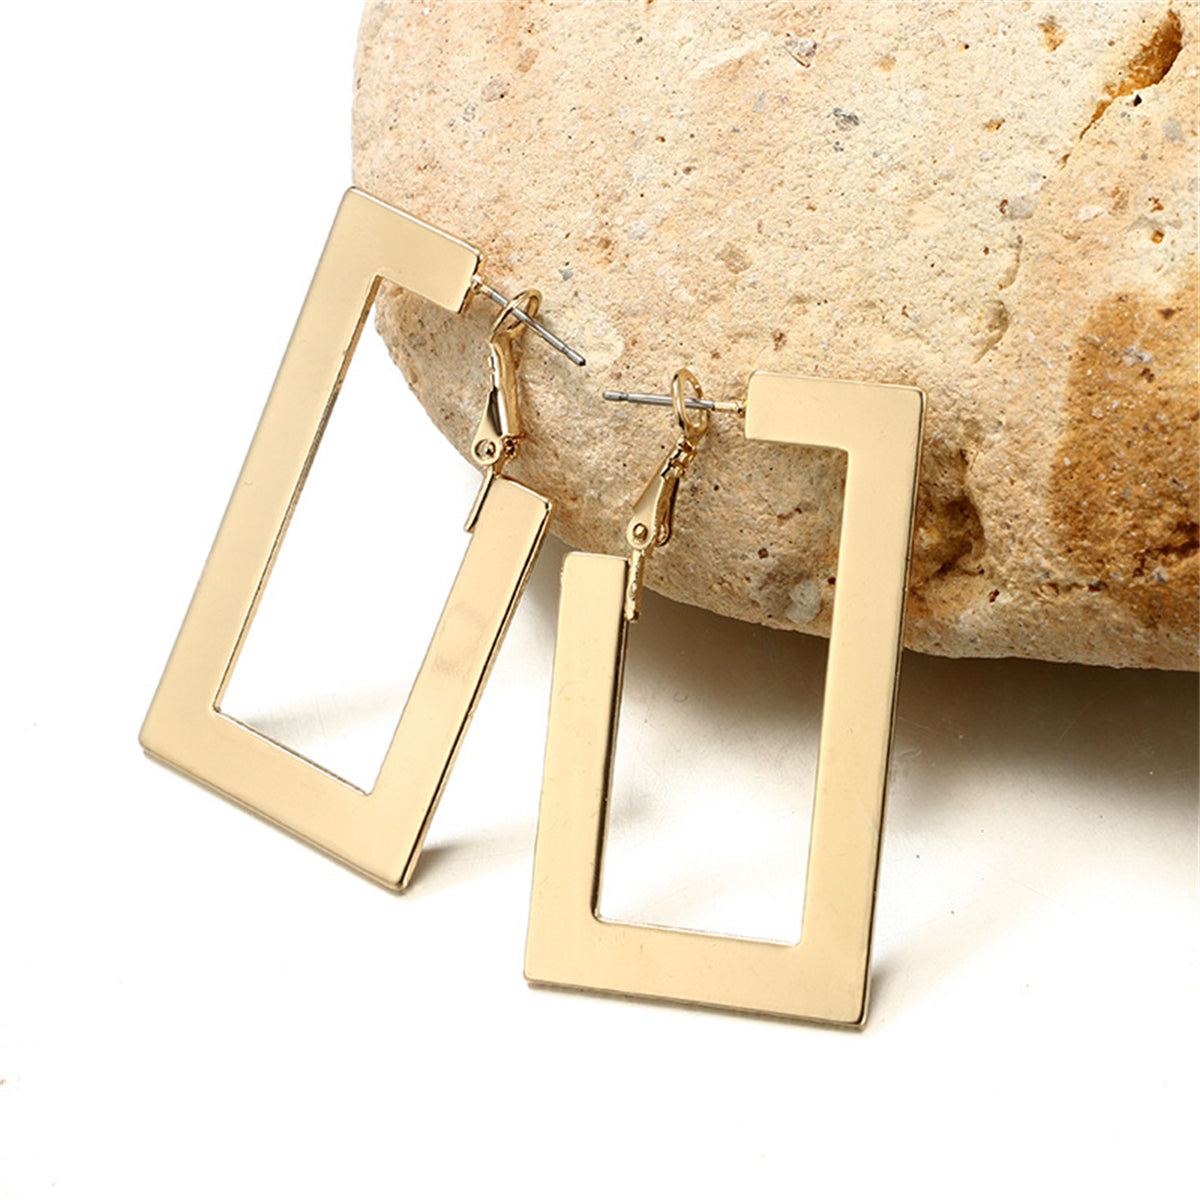 18K Gold-Plated Openwork Rectangle Drop Earrings Set